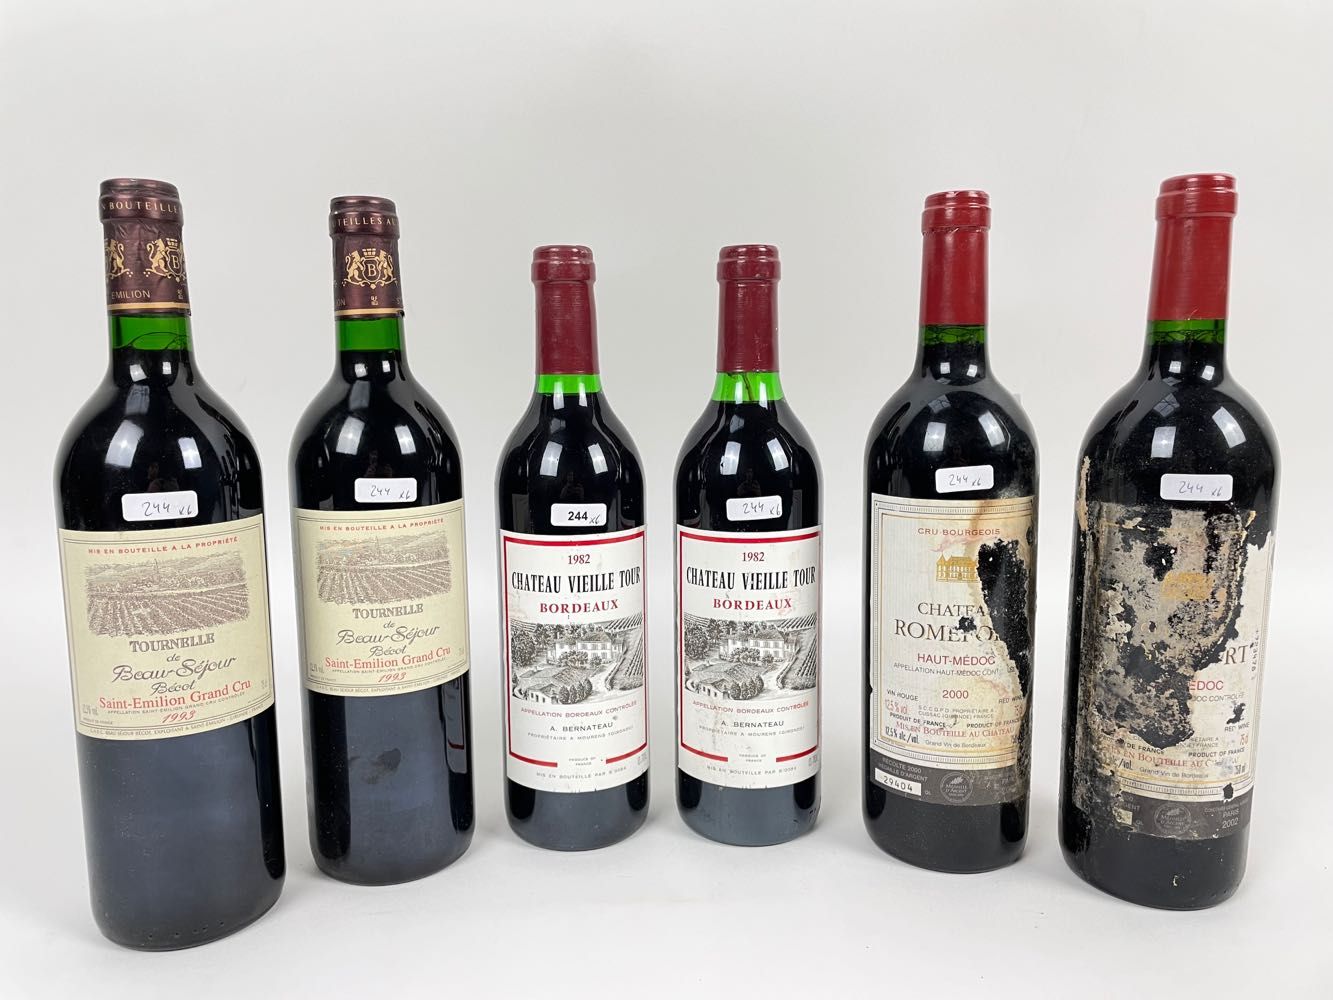 BORDEAUX Lote de seis botellas (rojo):
- Château Vieille-Tour 1982, dos botellas&hellip;